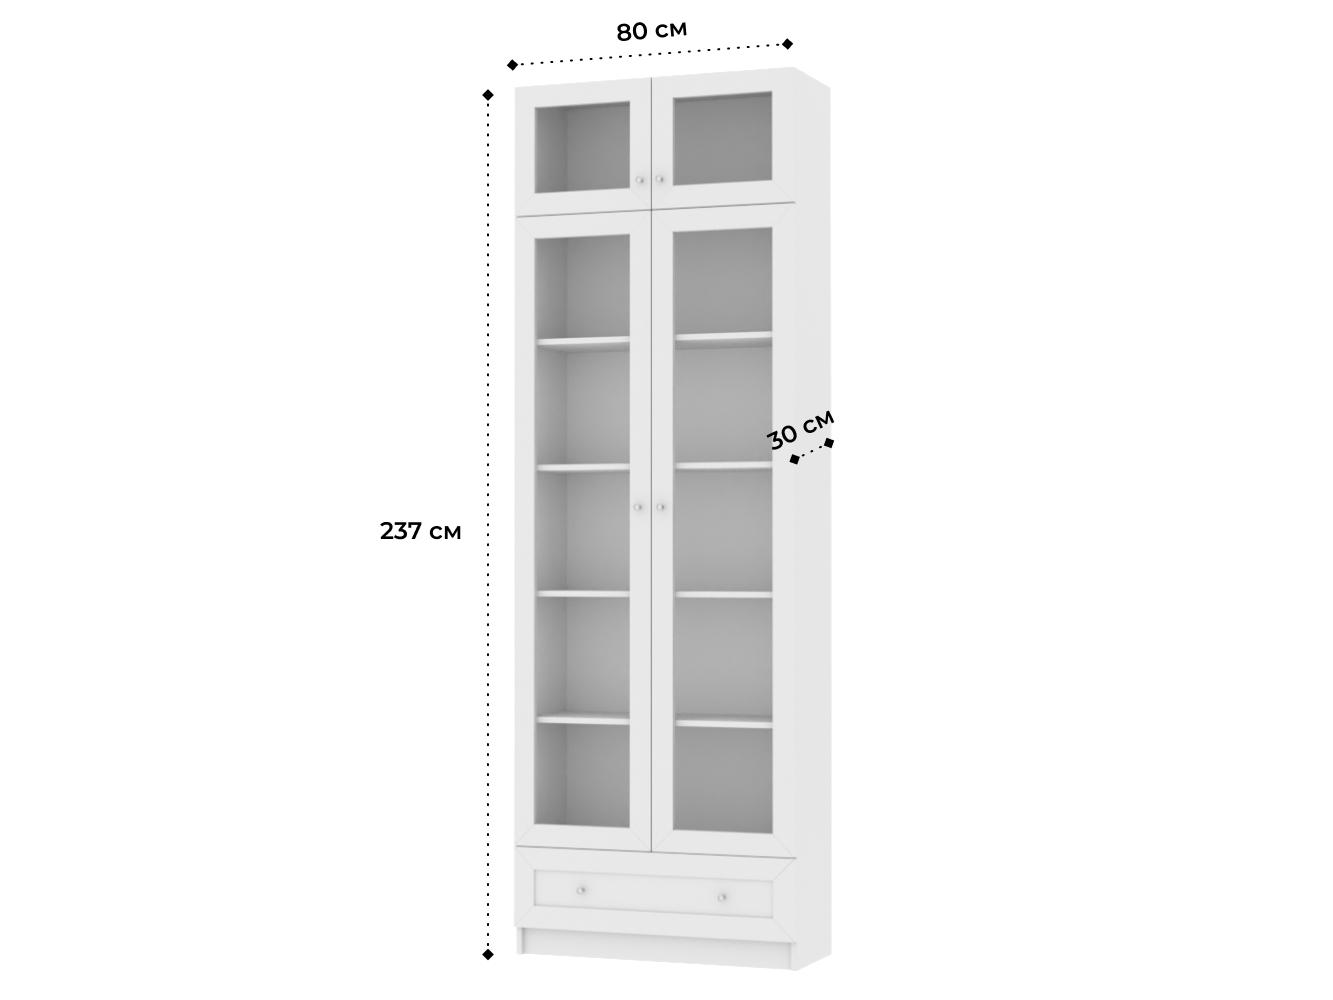 Книжный шкаф Билли 322 white ИКЕА (IKEA) изображение товара